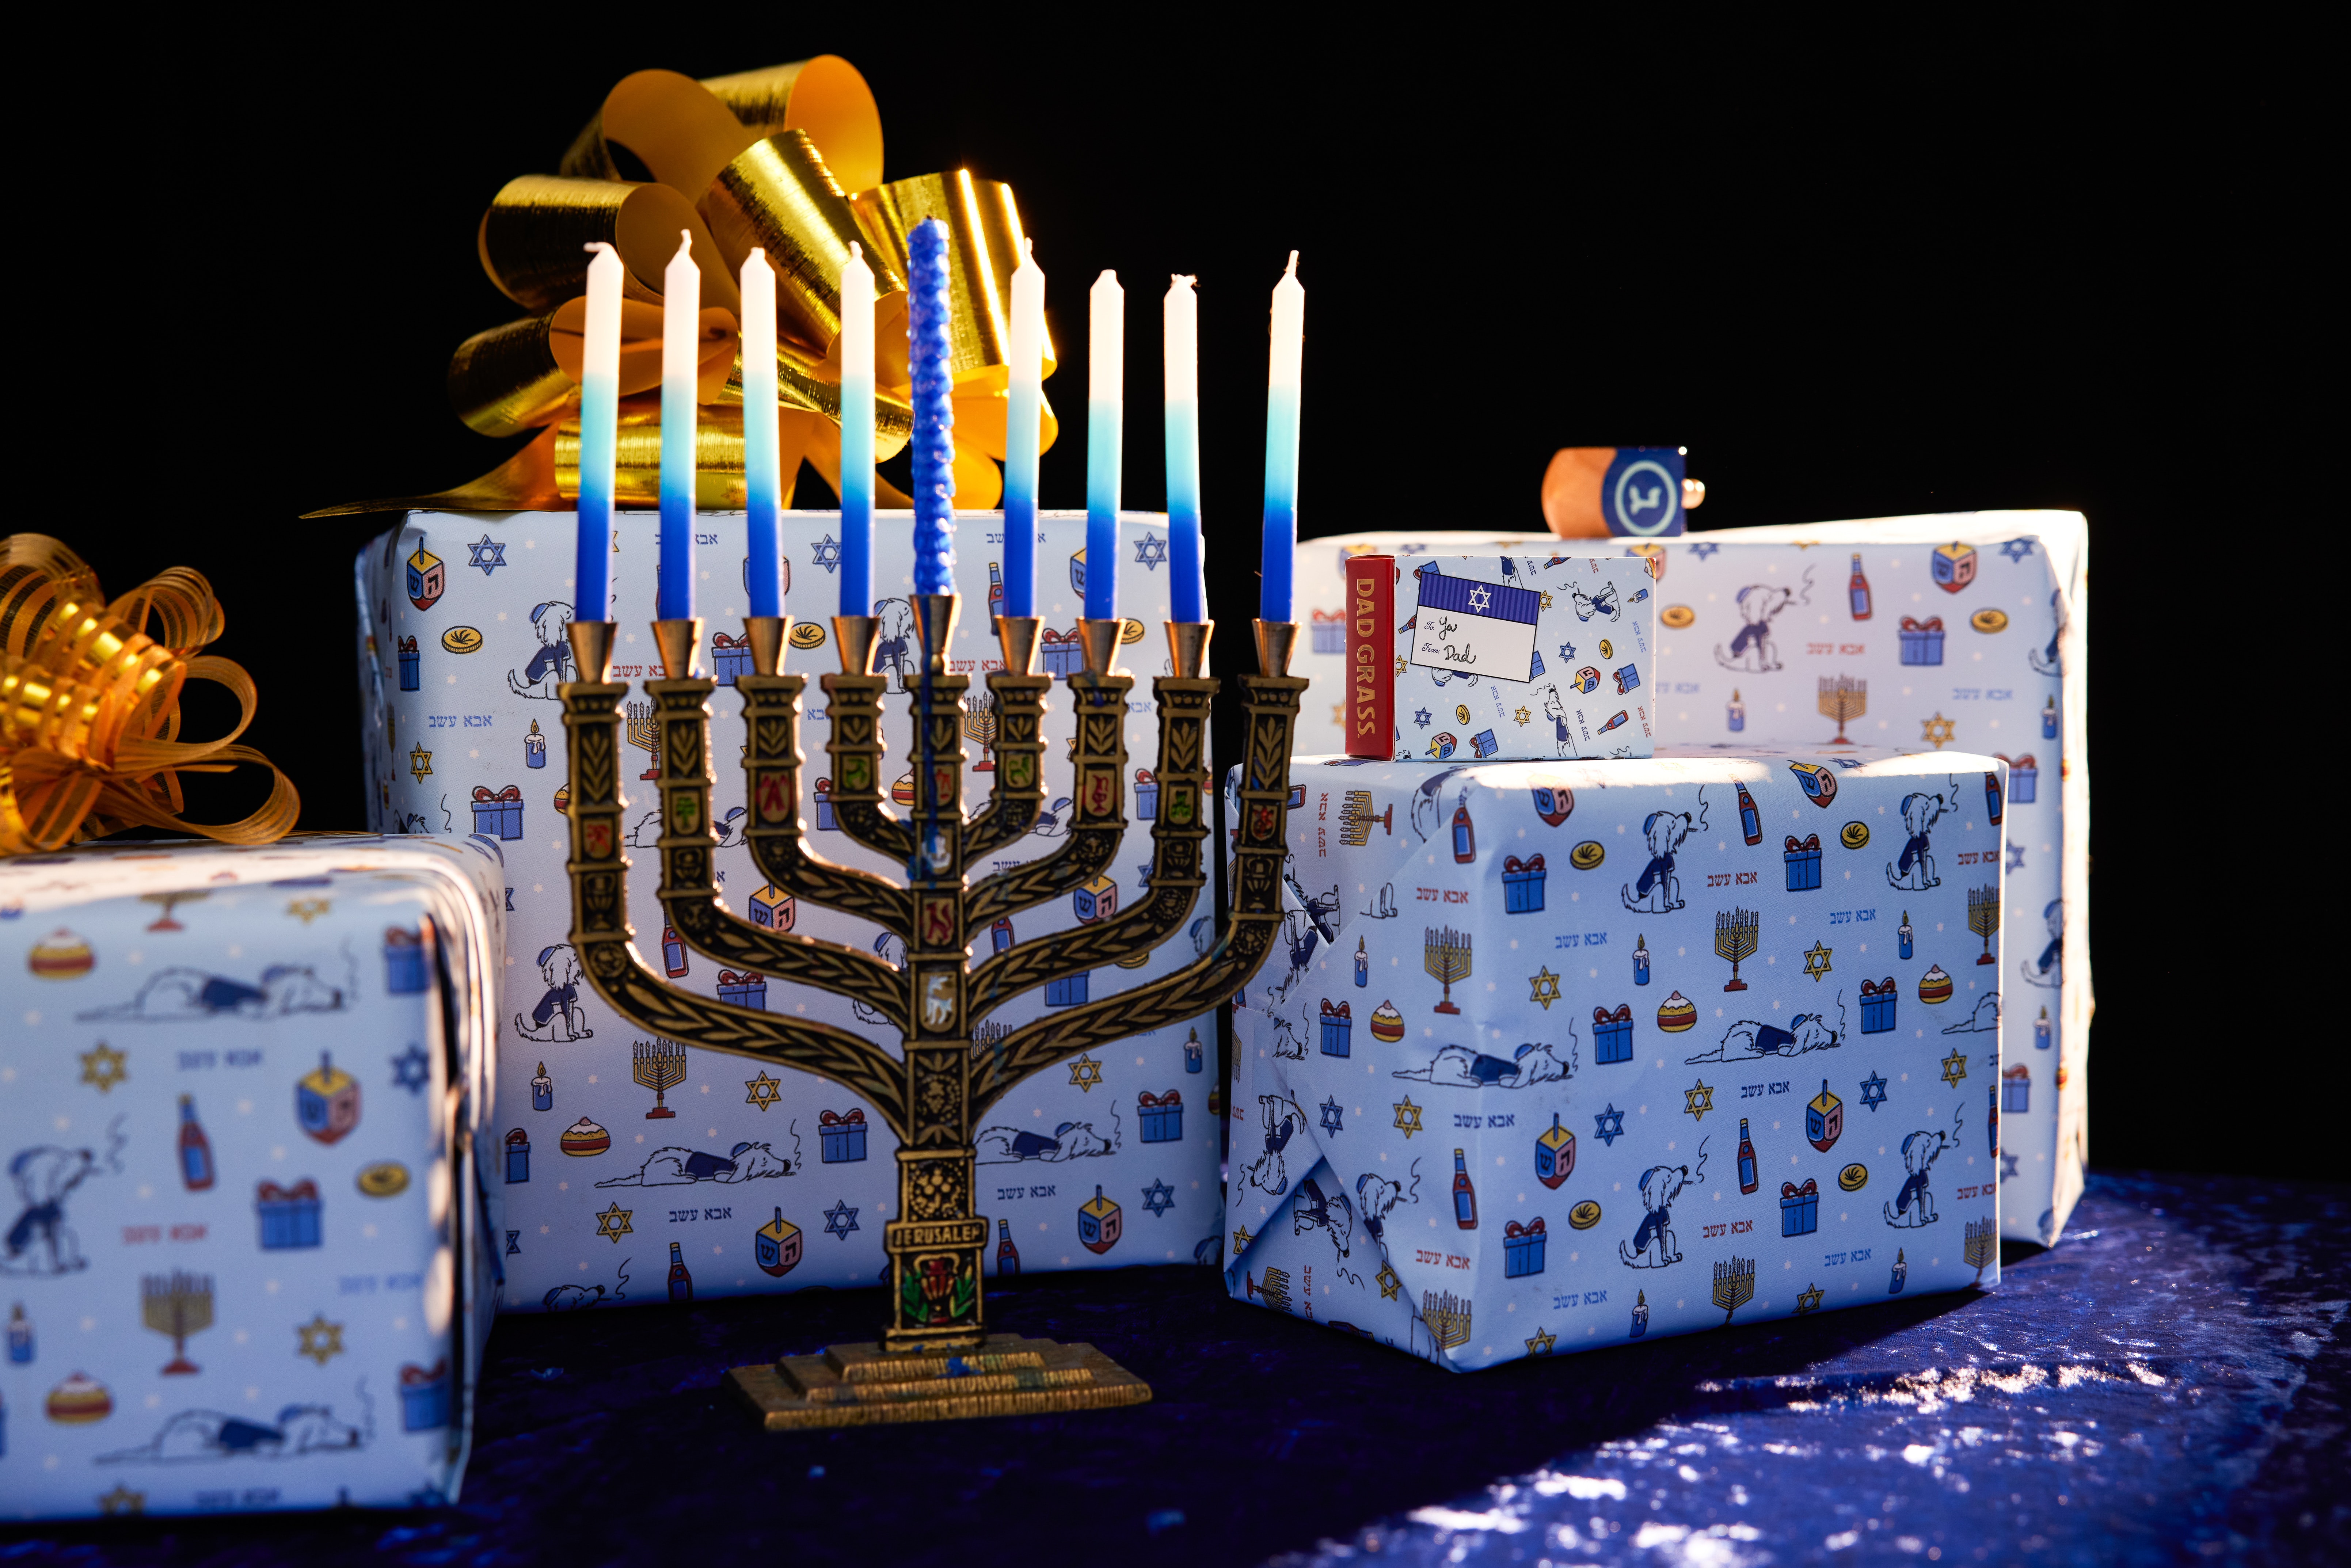 A Hanukkah menorah and wrapped presents